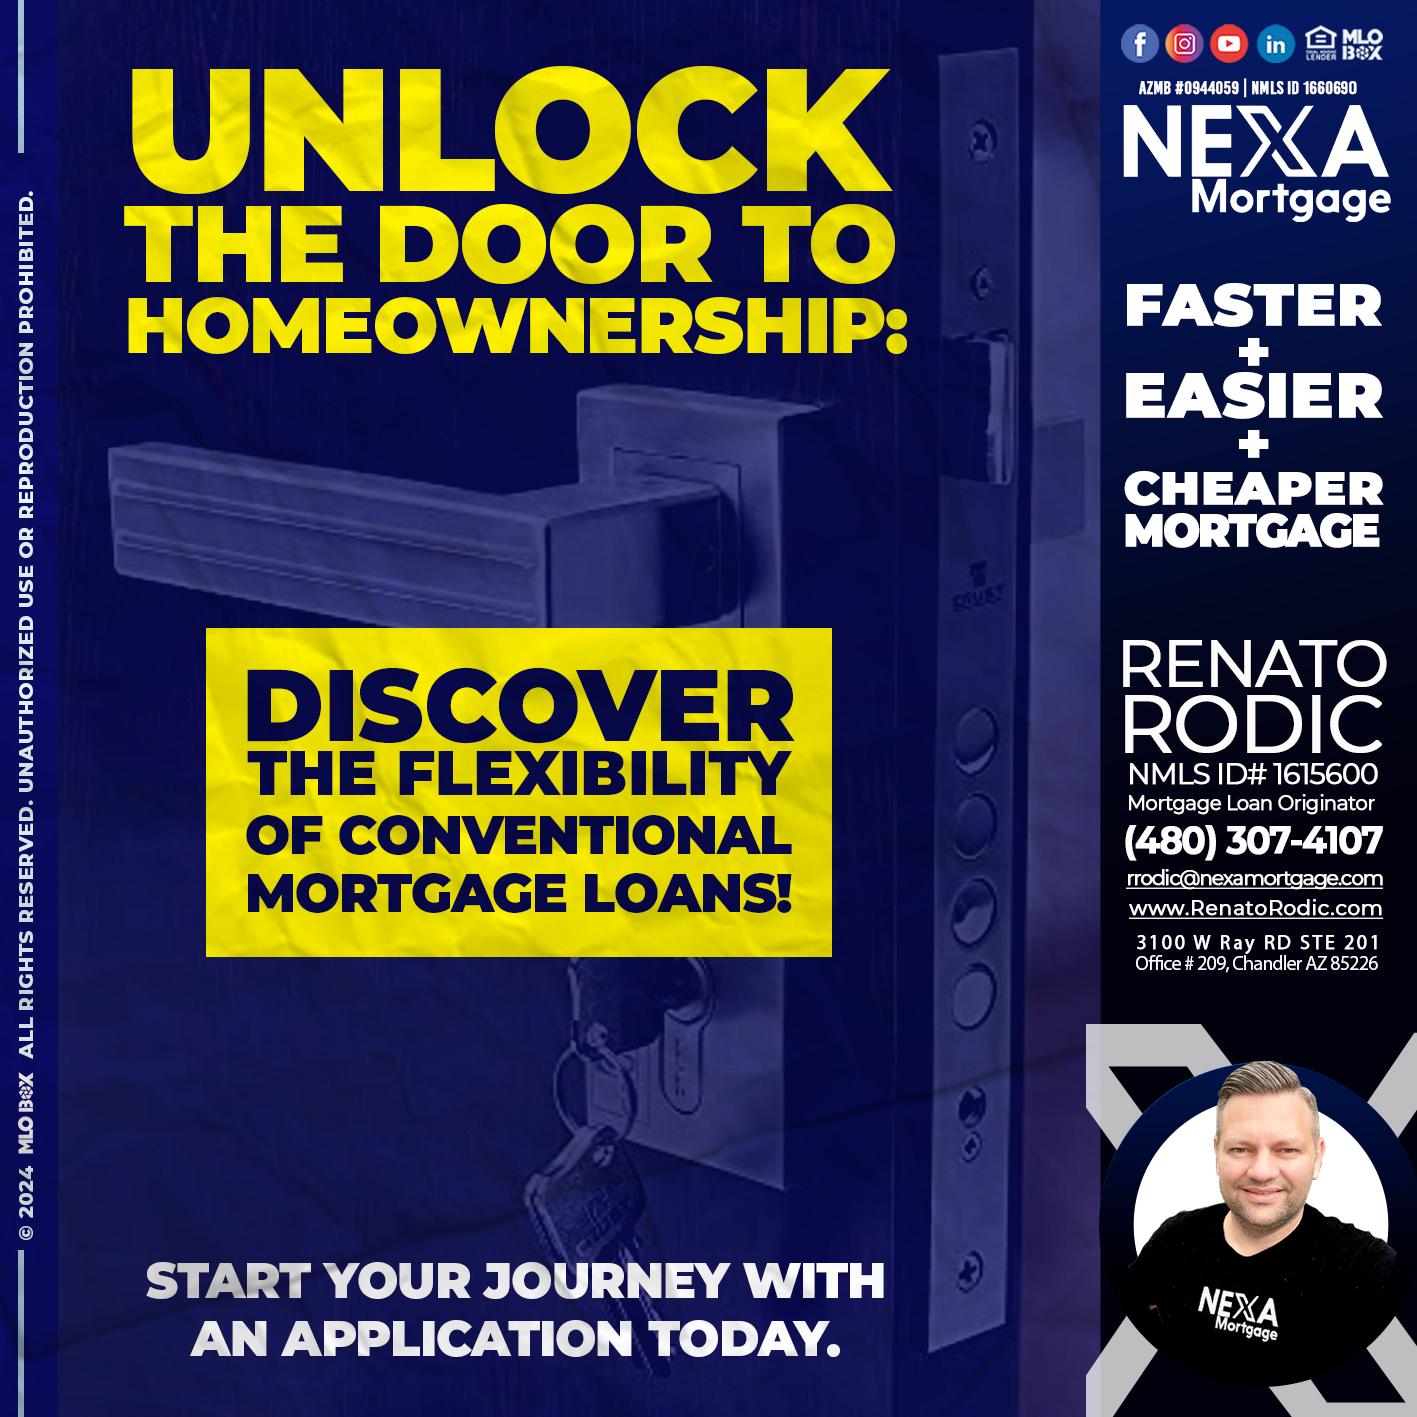 UNLOCK - Renato Rodic -Mortgage Loan Originator